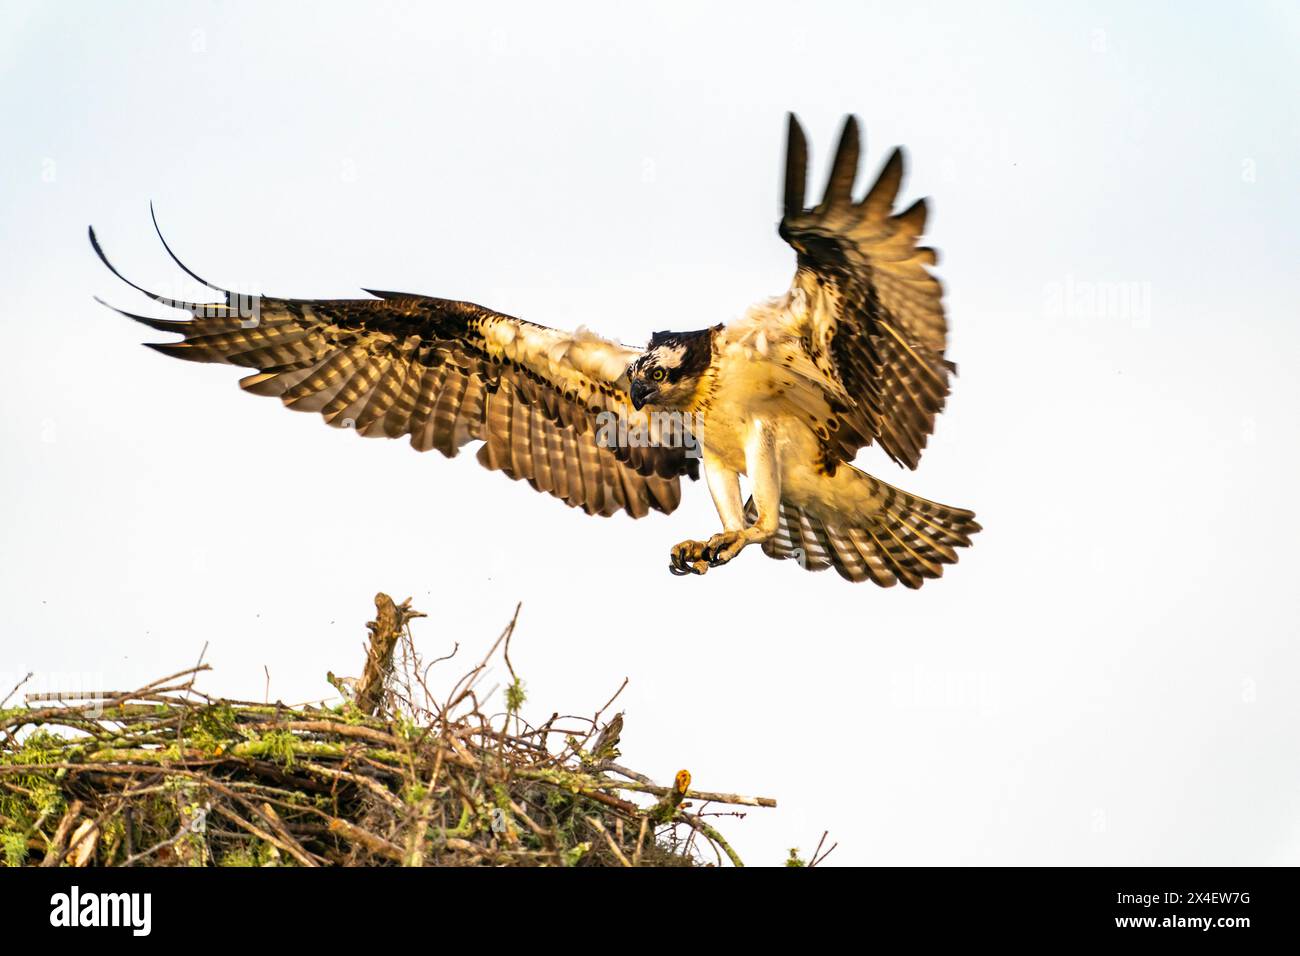 USA, Louisiana, bacino di Atchafalaya, palude di Atchafalaya. Osprey atterra sul nido. Foto Stock